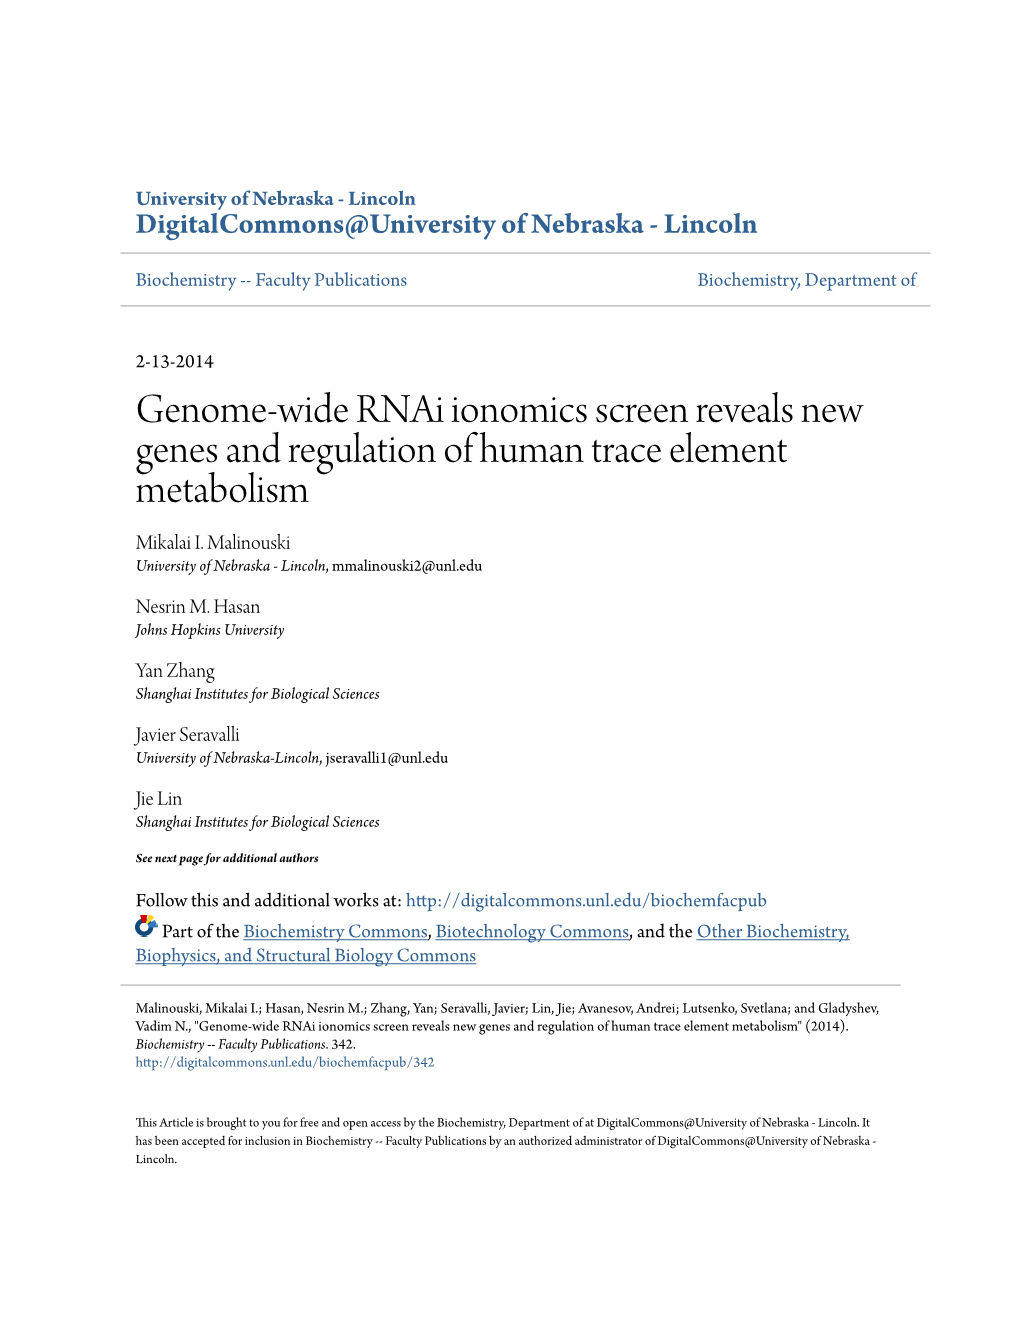 Genome-Wide Rnai Ionomics Screen Reveals New Genes and Regulation of Human Trace Element Metabolism Mikalai I